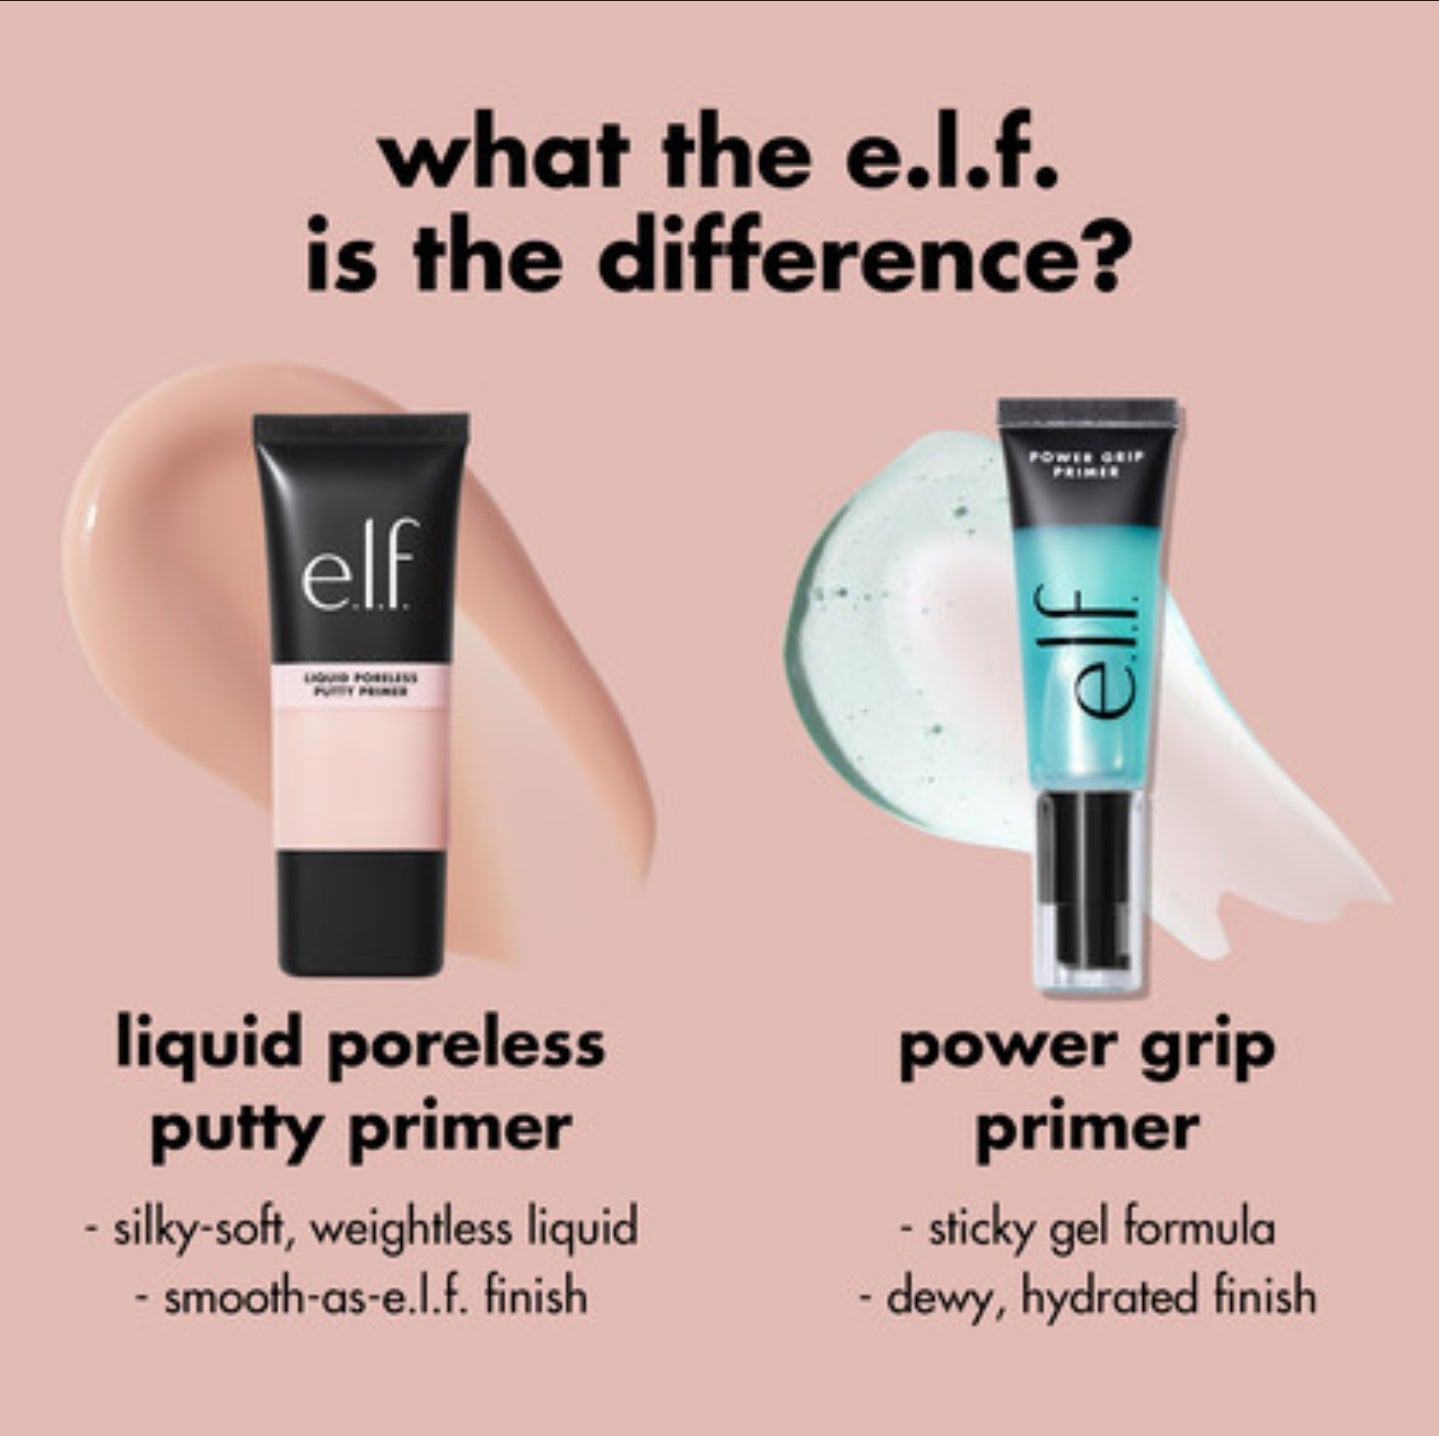 E.l.f Liquid Poreless Putty Primer